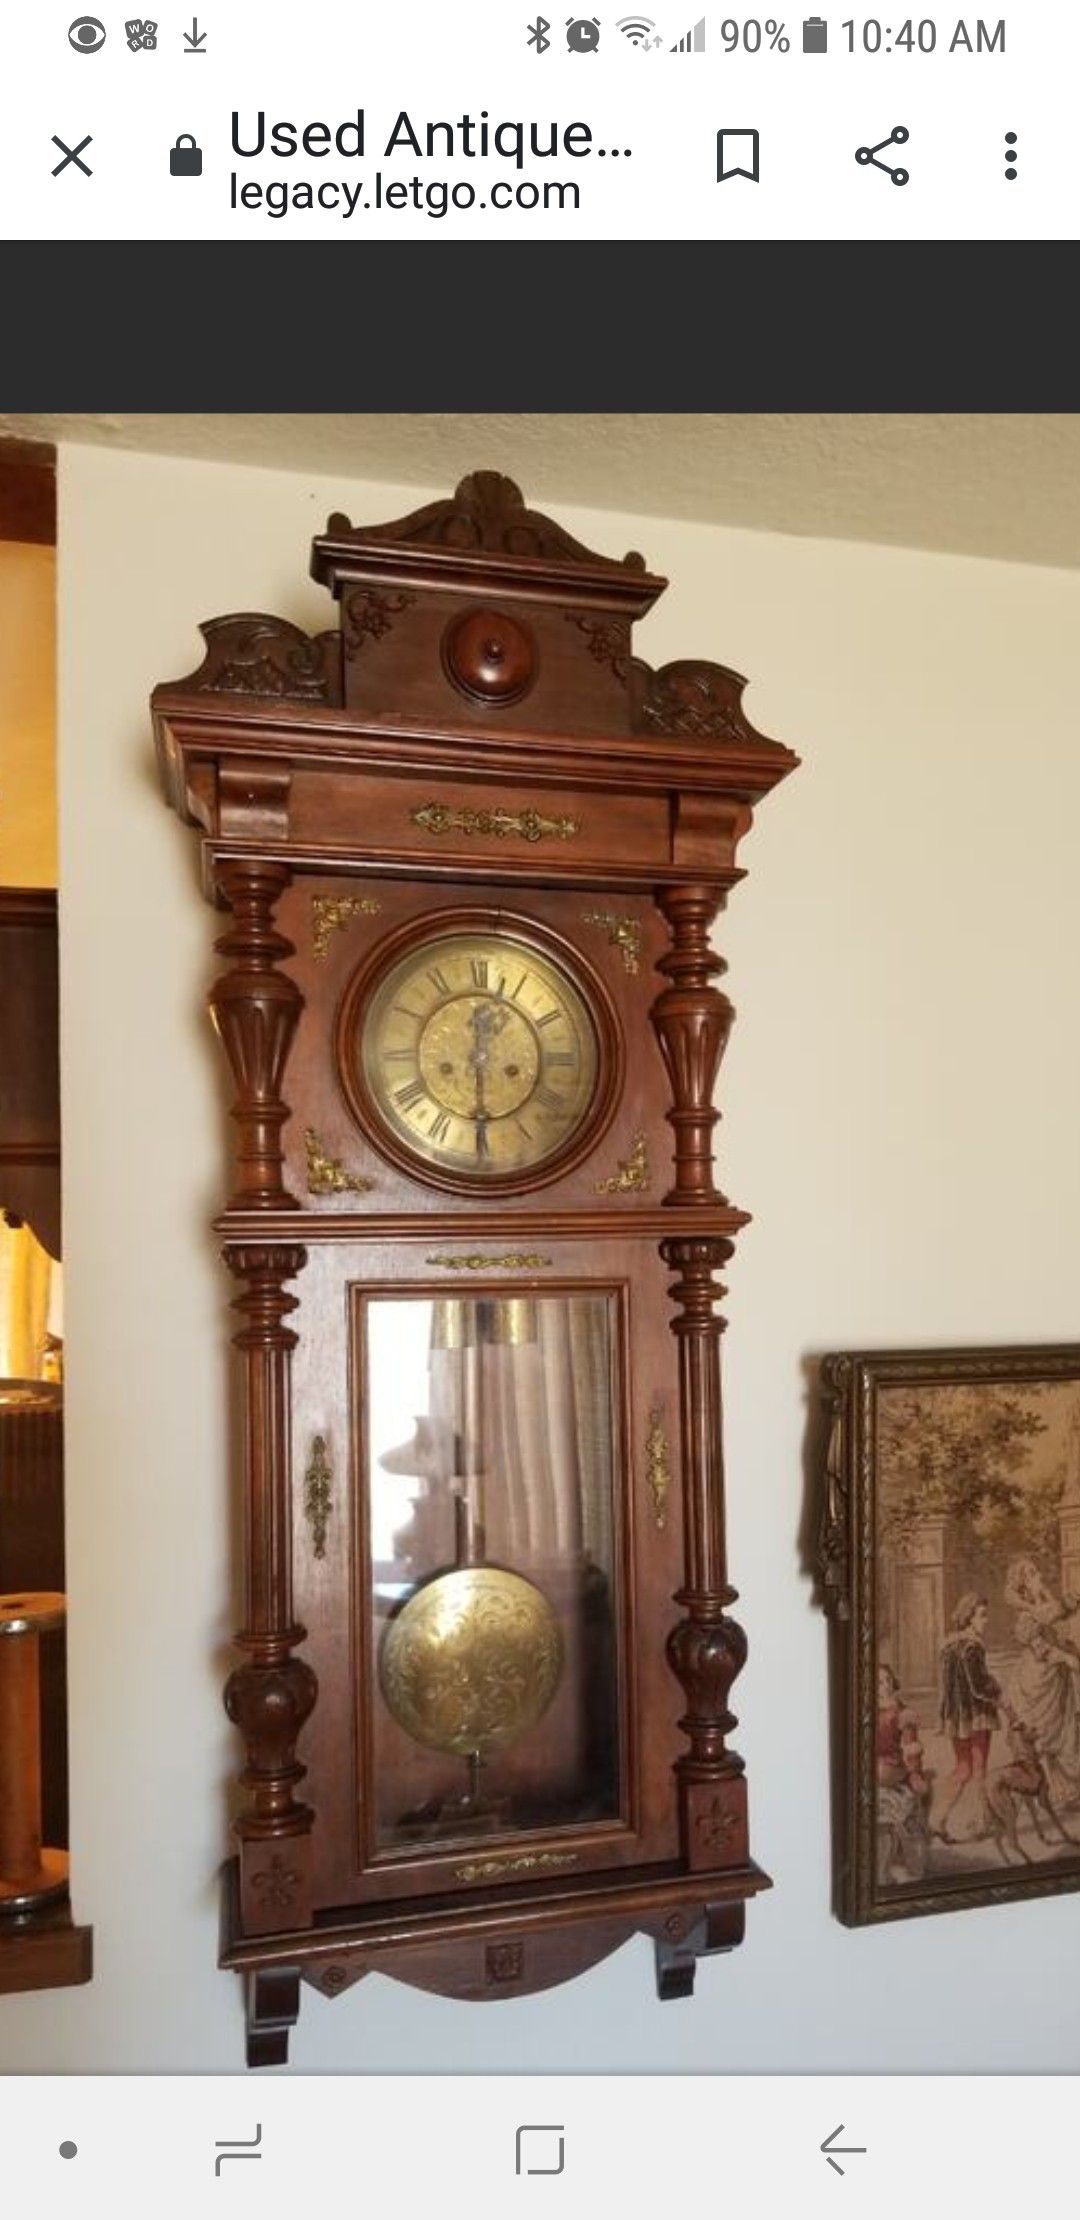 Antique Gustav Becker Wall Clock Etched Face, Weights, Pendulum -Works